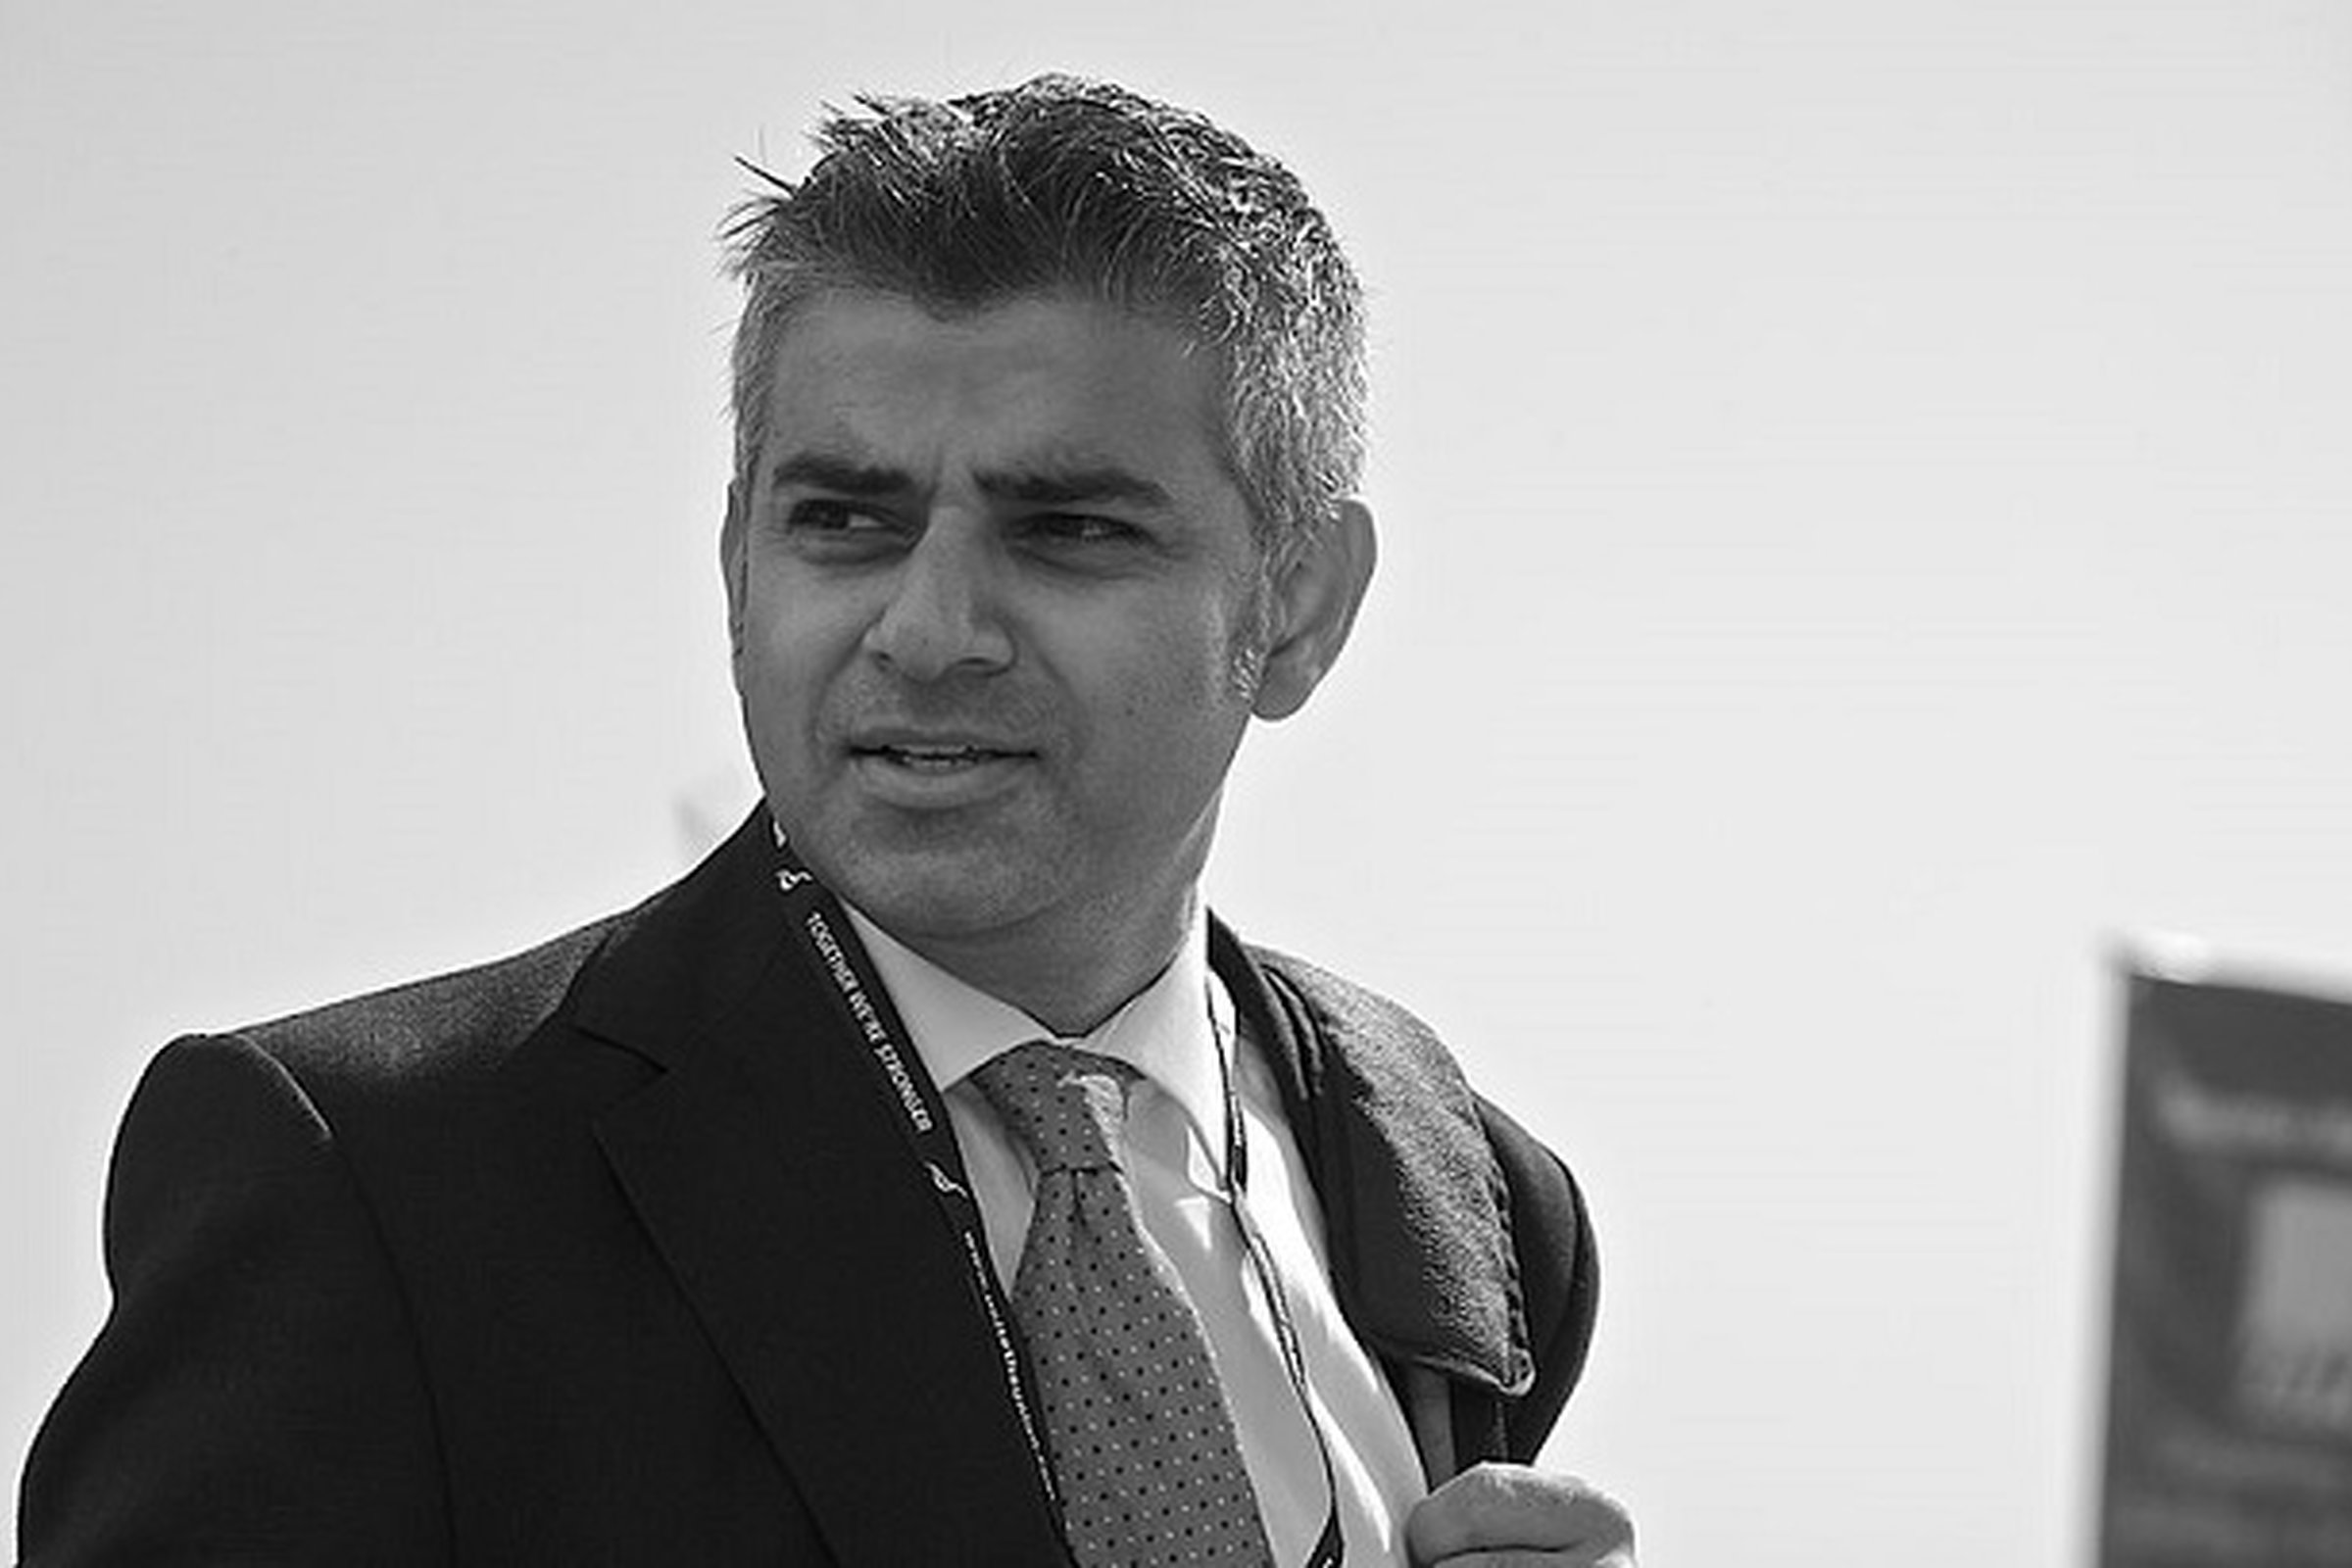 Political attacks on religious faith: the London mayoral case